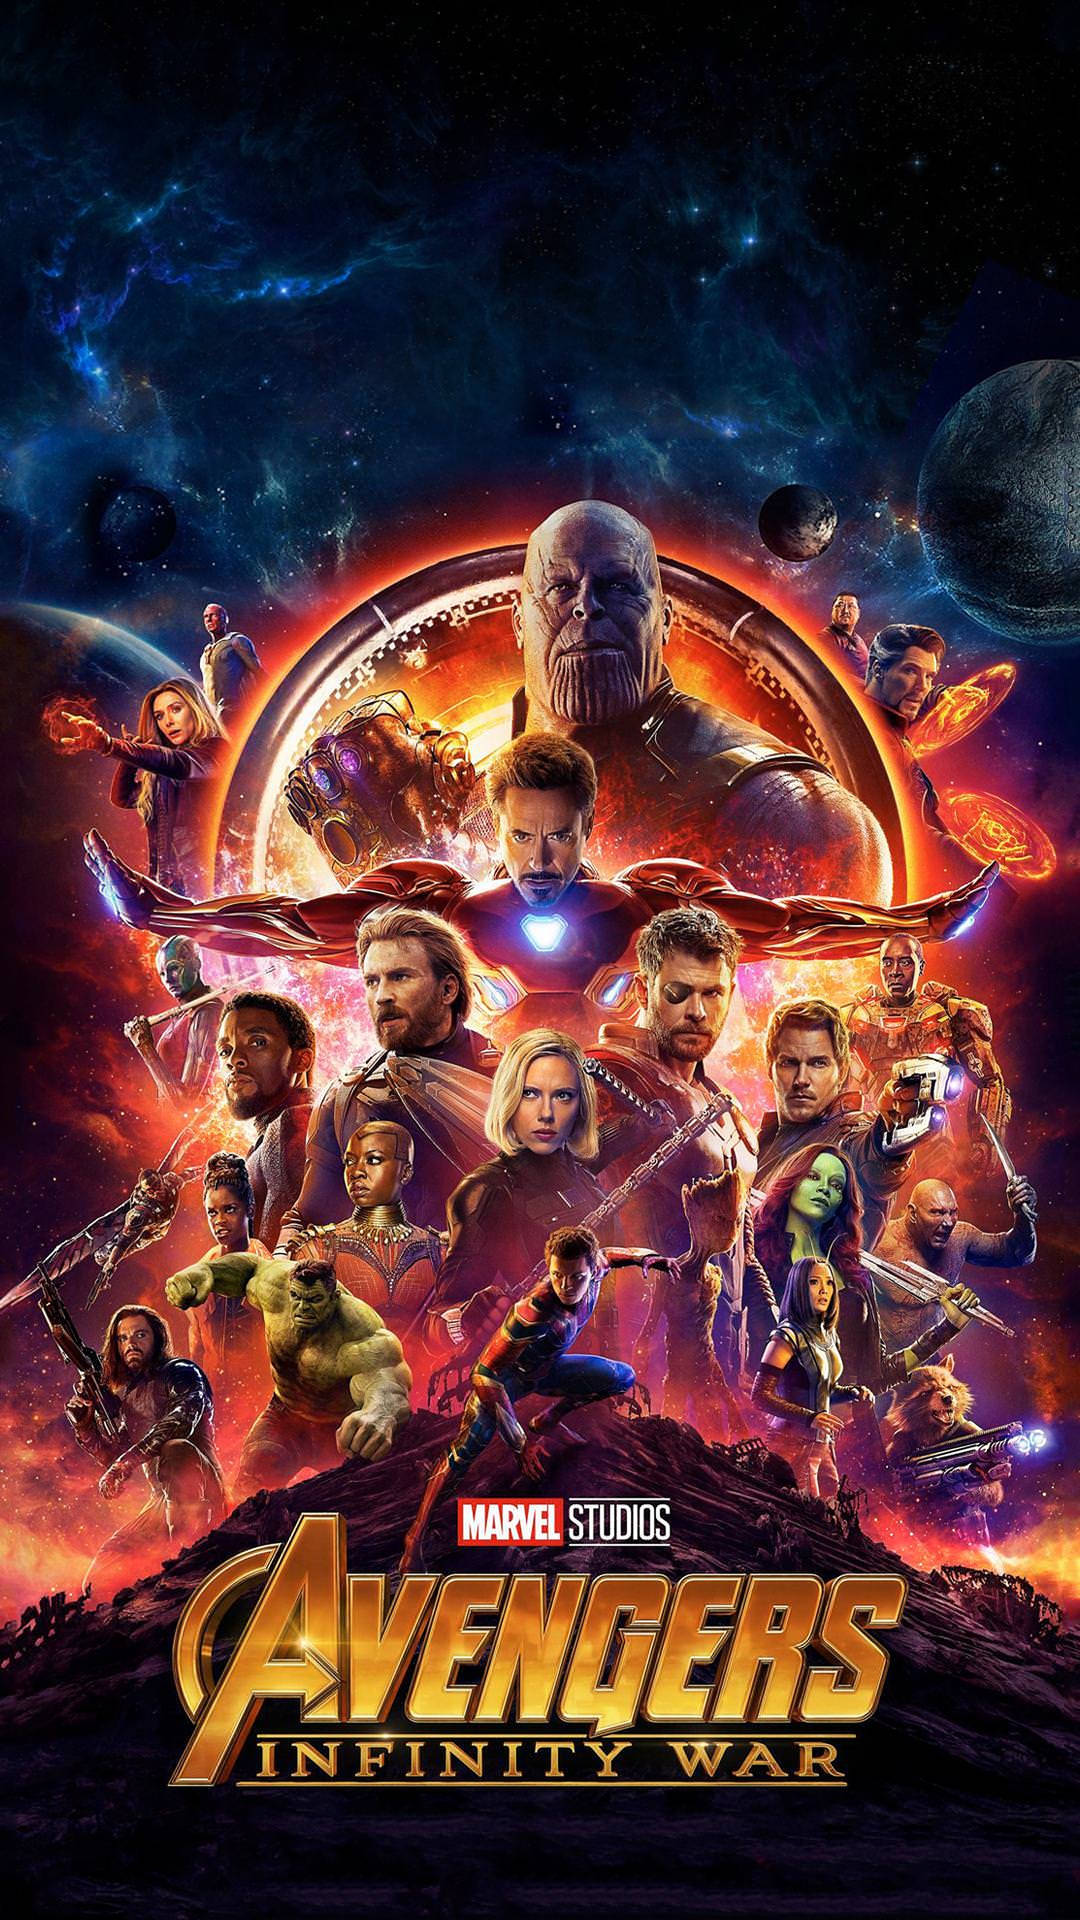 Marvel Studios Avengers Android Infinity War Wallpaper